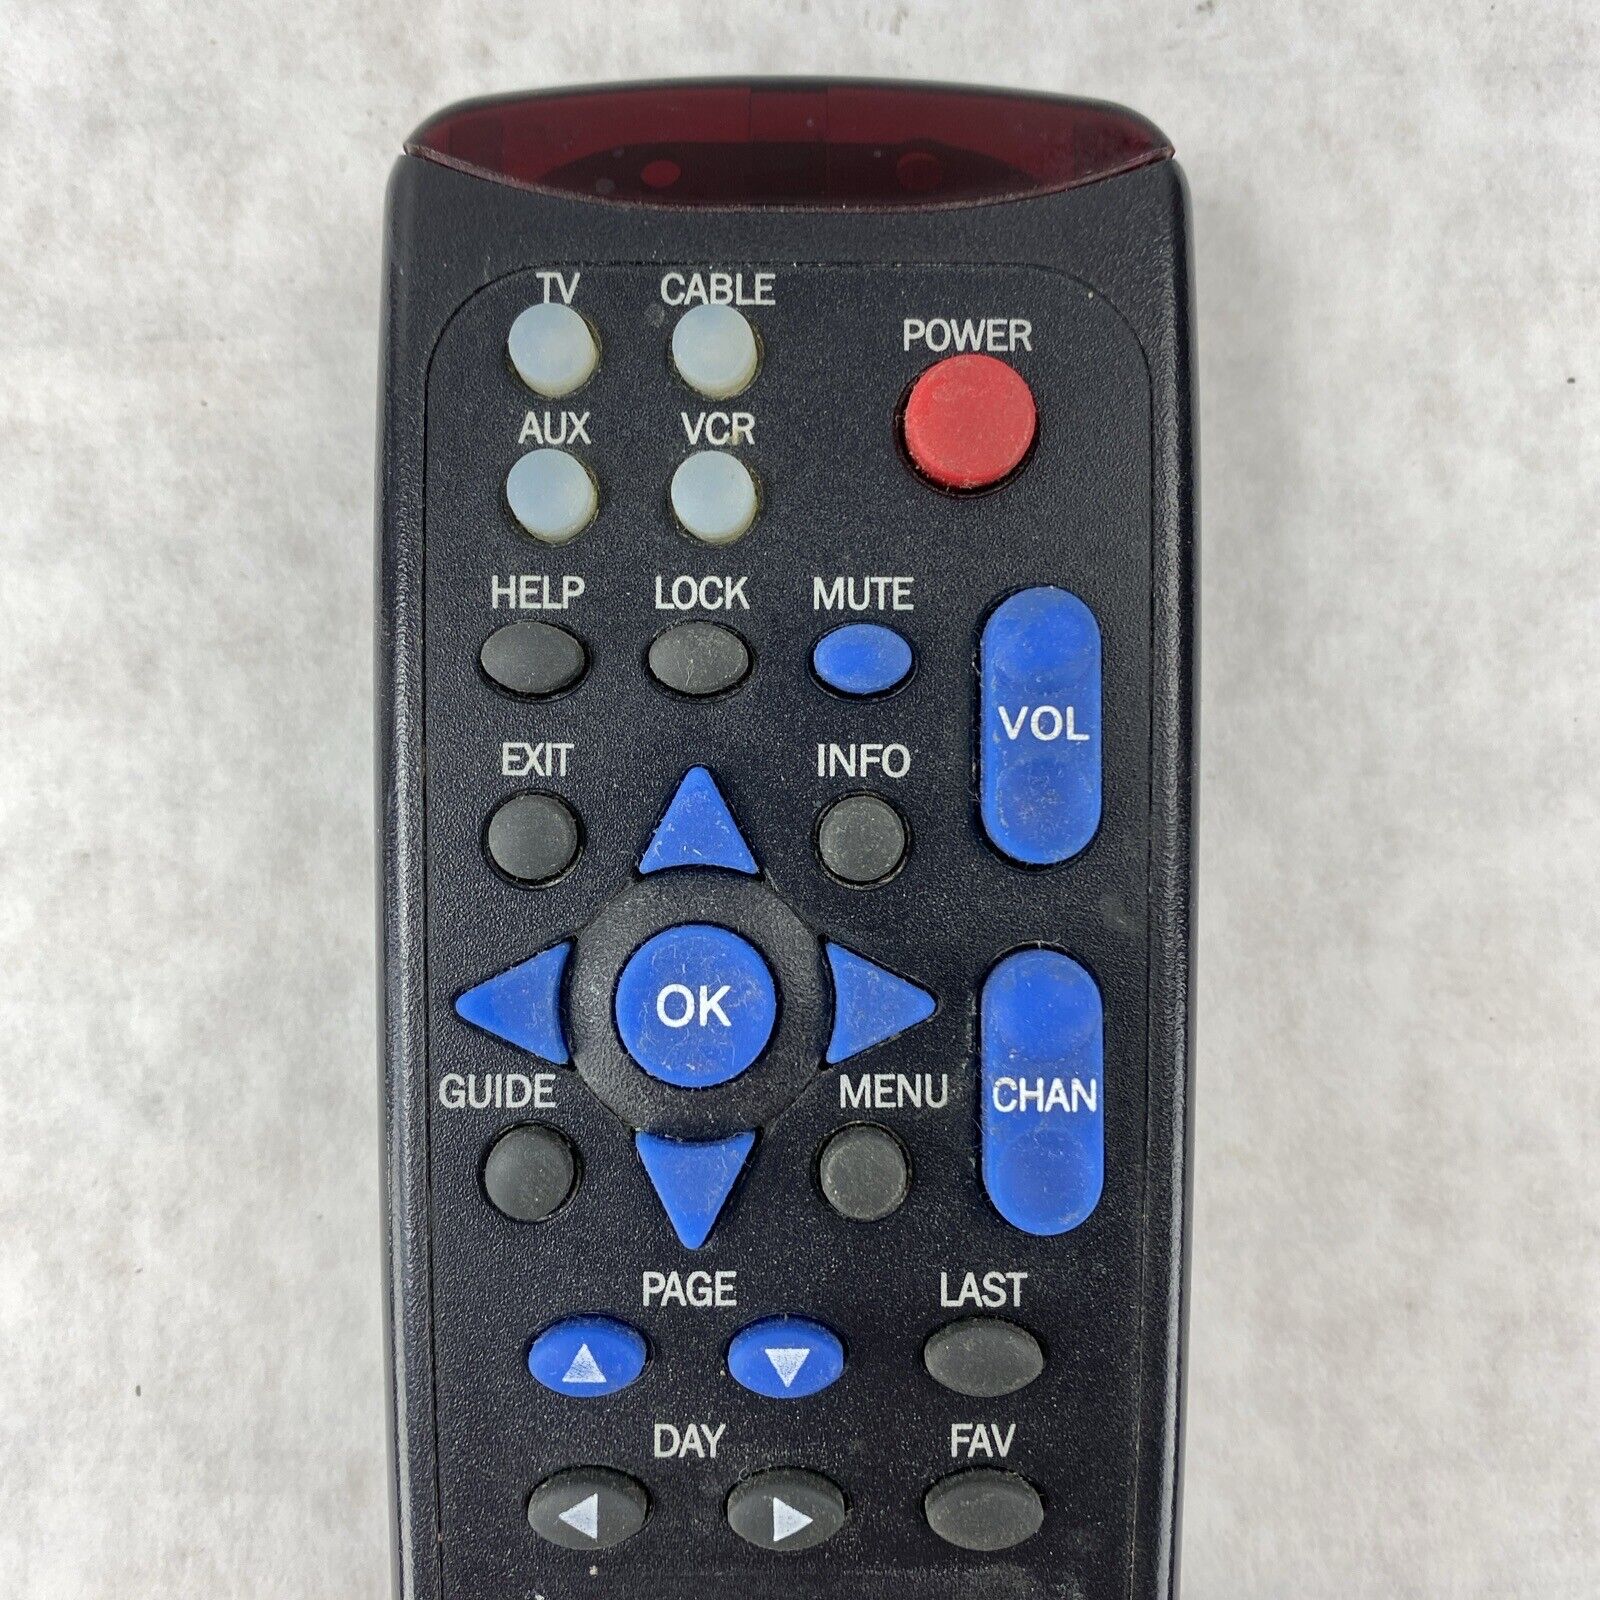 ATT 200B UA068 Genuine OEM Remote Control TV VCR Cable Box TESTED